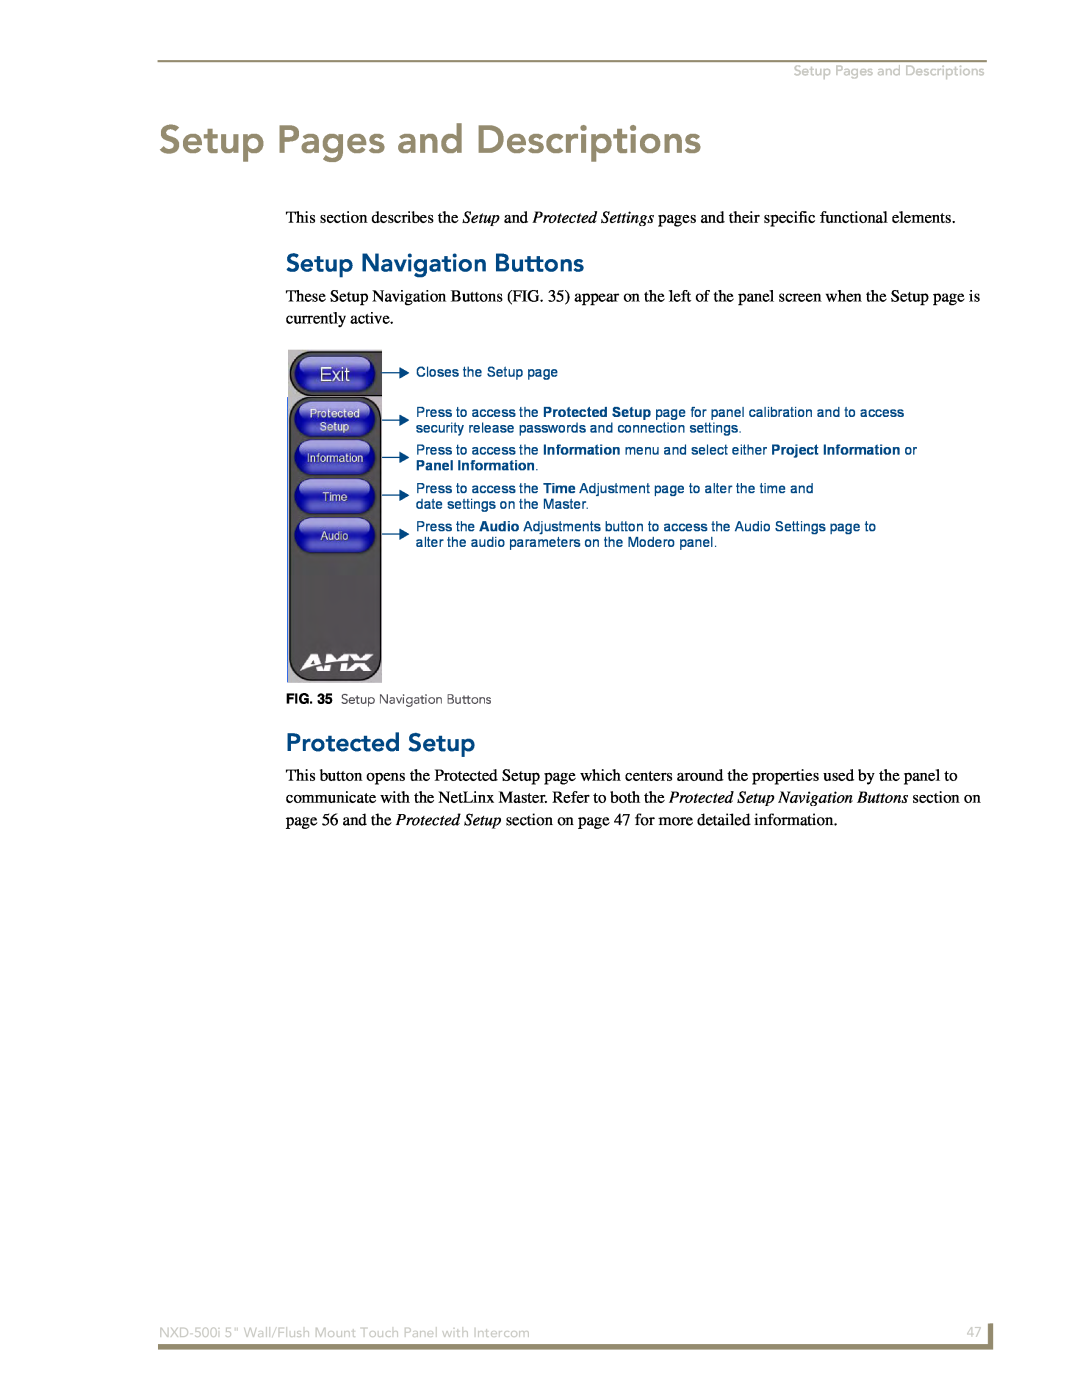 AMX NXD-500i manual Setup Pages and Descriptions, Setup Navigation Buttons, Protected Setup 